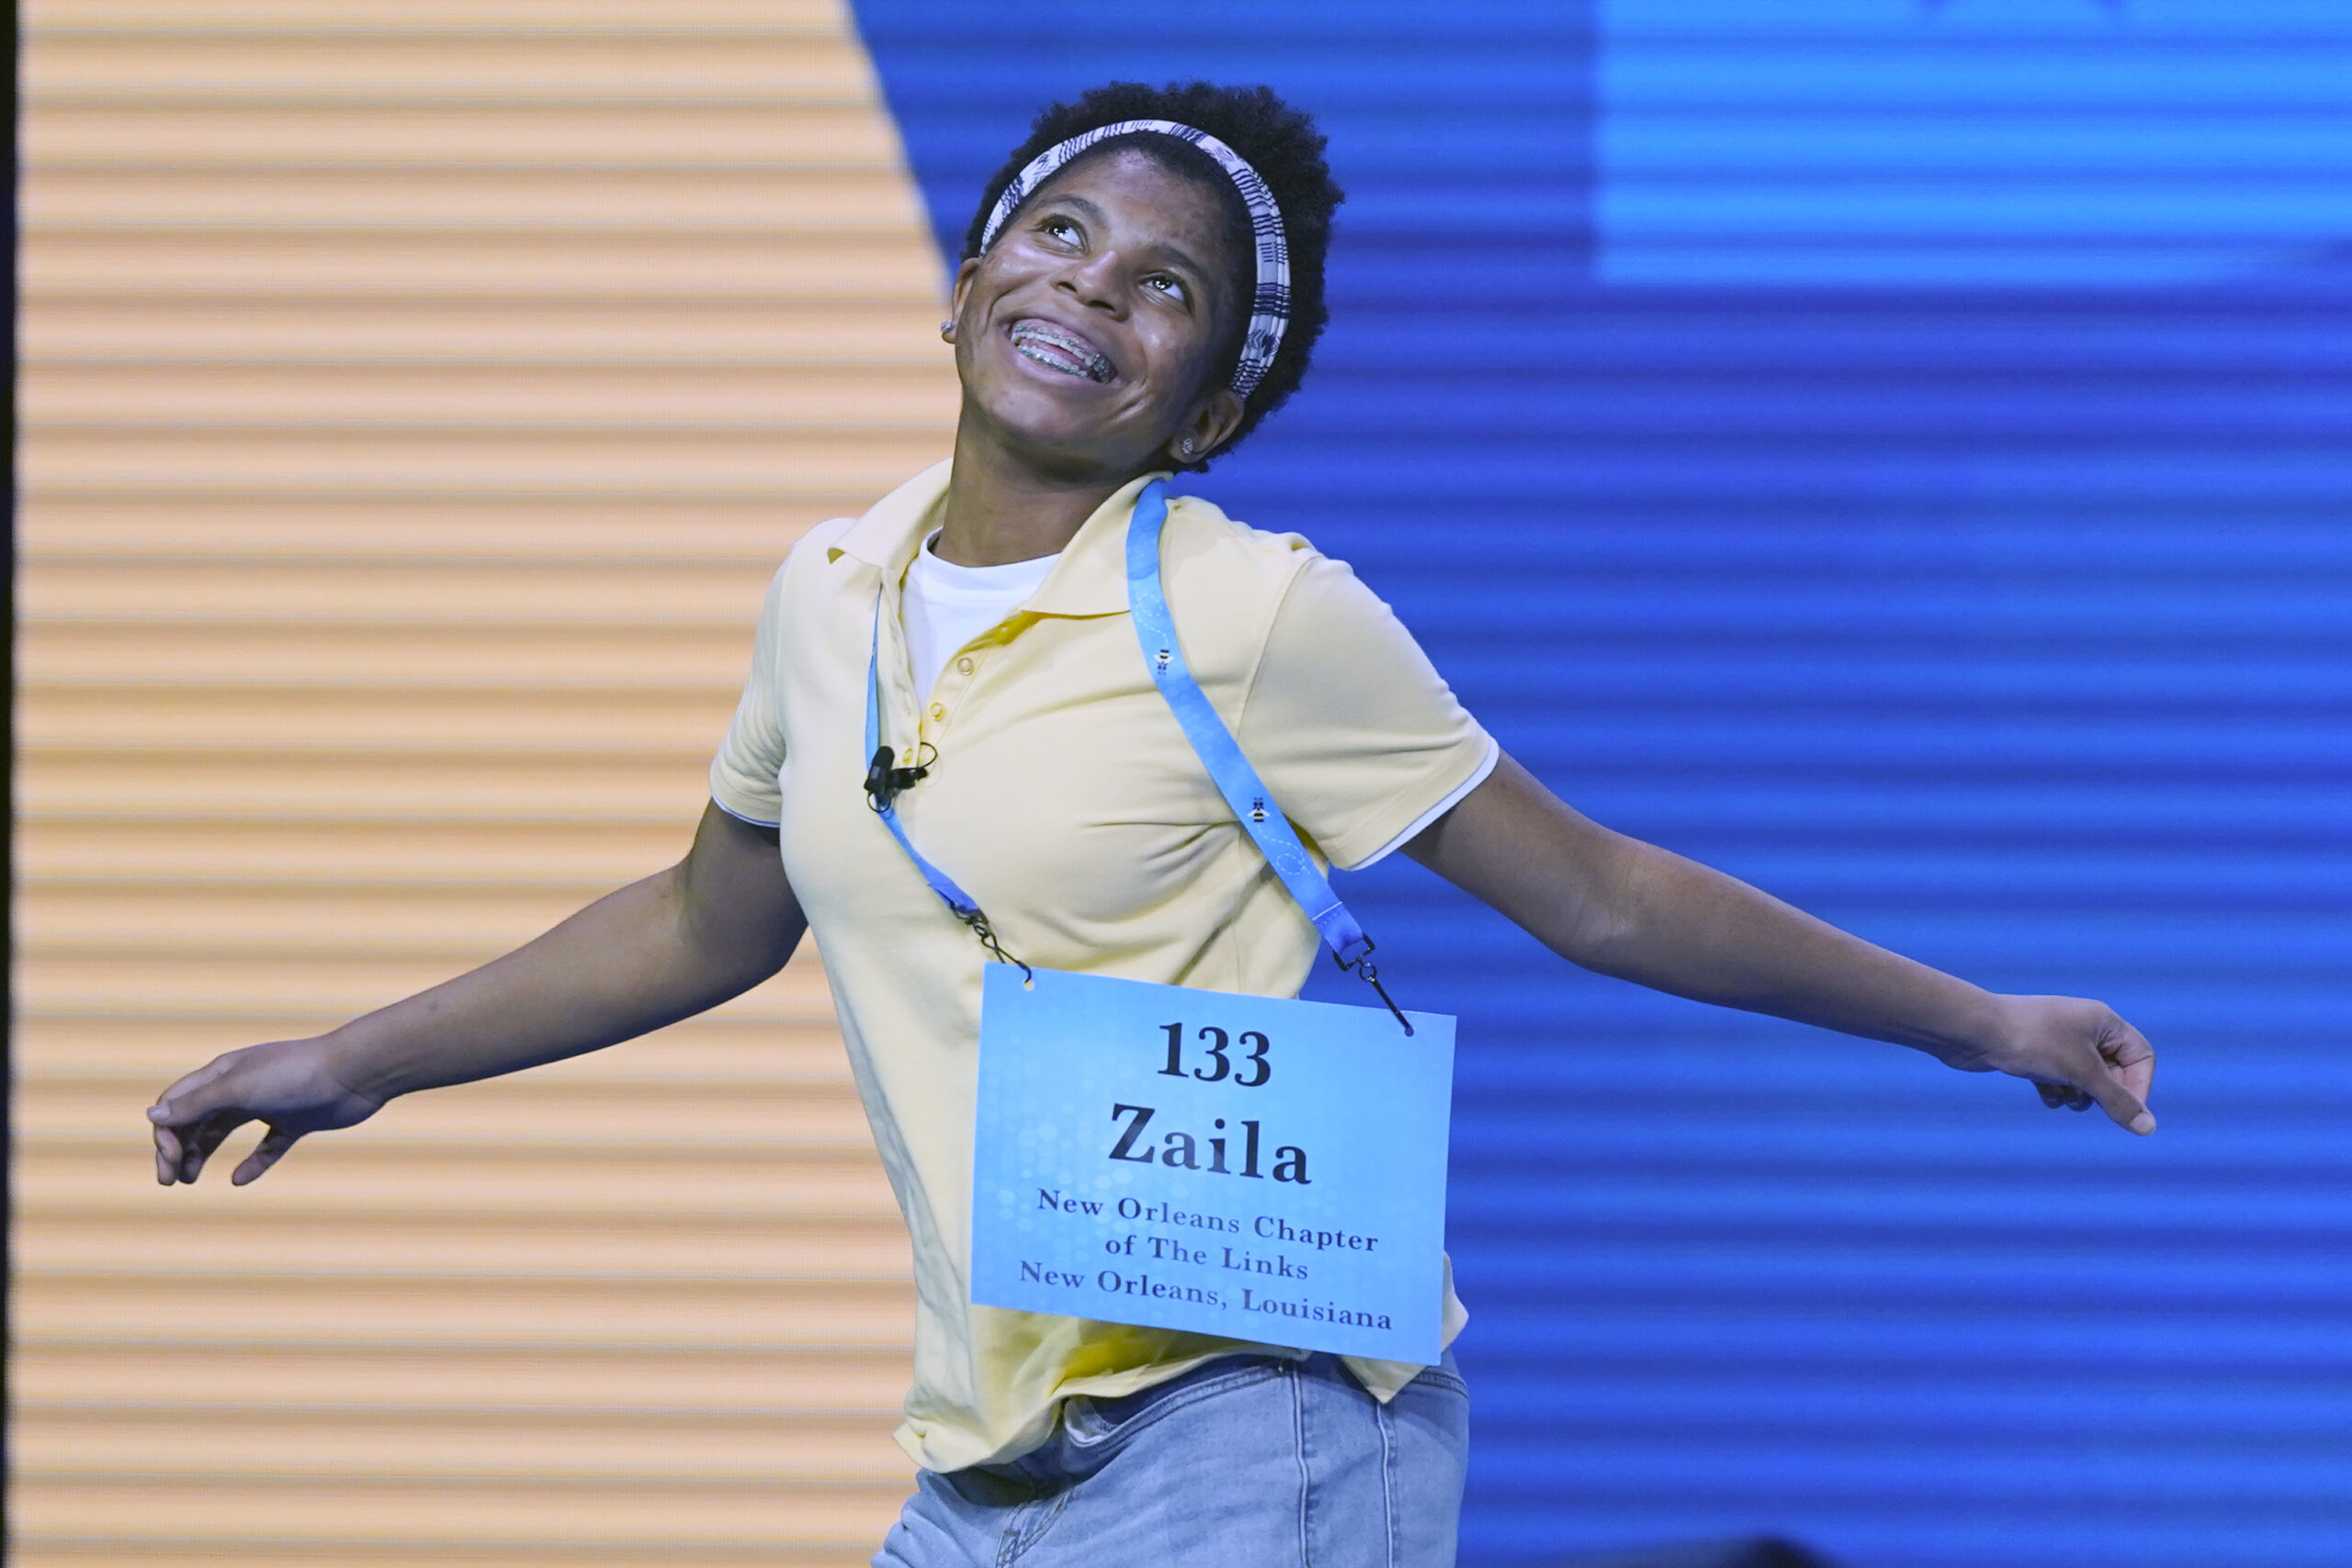 Zaila Avant-garde, 14, from Harvey, Louisiana celebrates after winning the finals of the 2021 Scripps National Spelling Bee at Disney World Thursday, July 8, 2021, in Lake Buena Vista, Fla. (AP Photo/John Raoux)